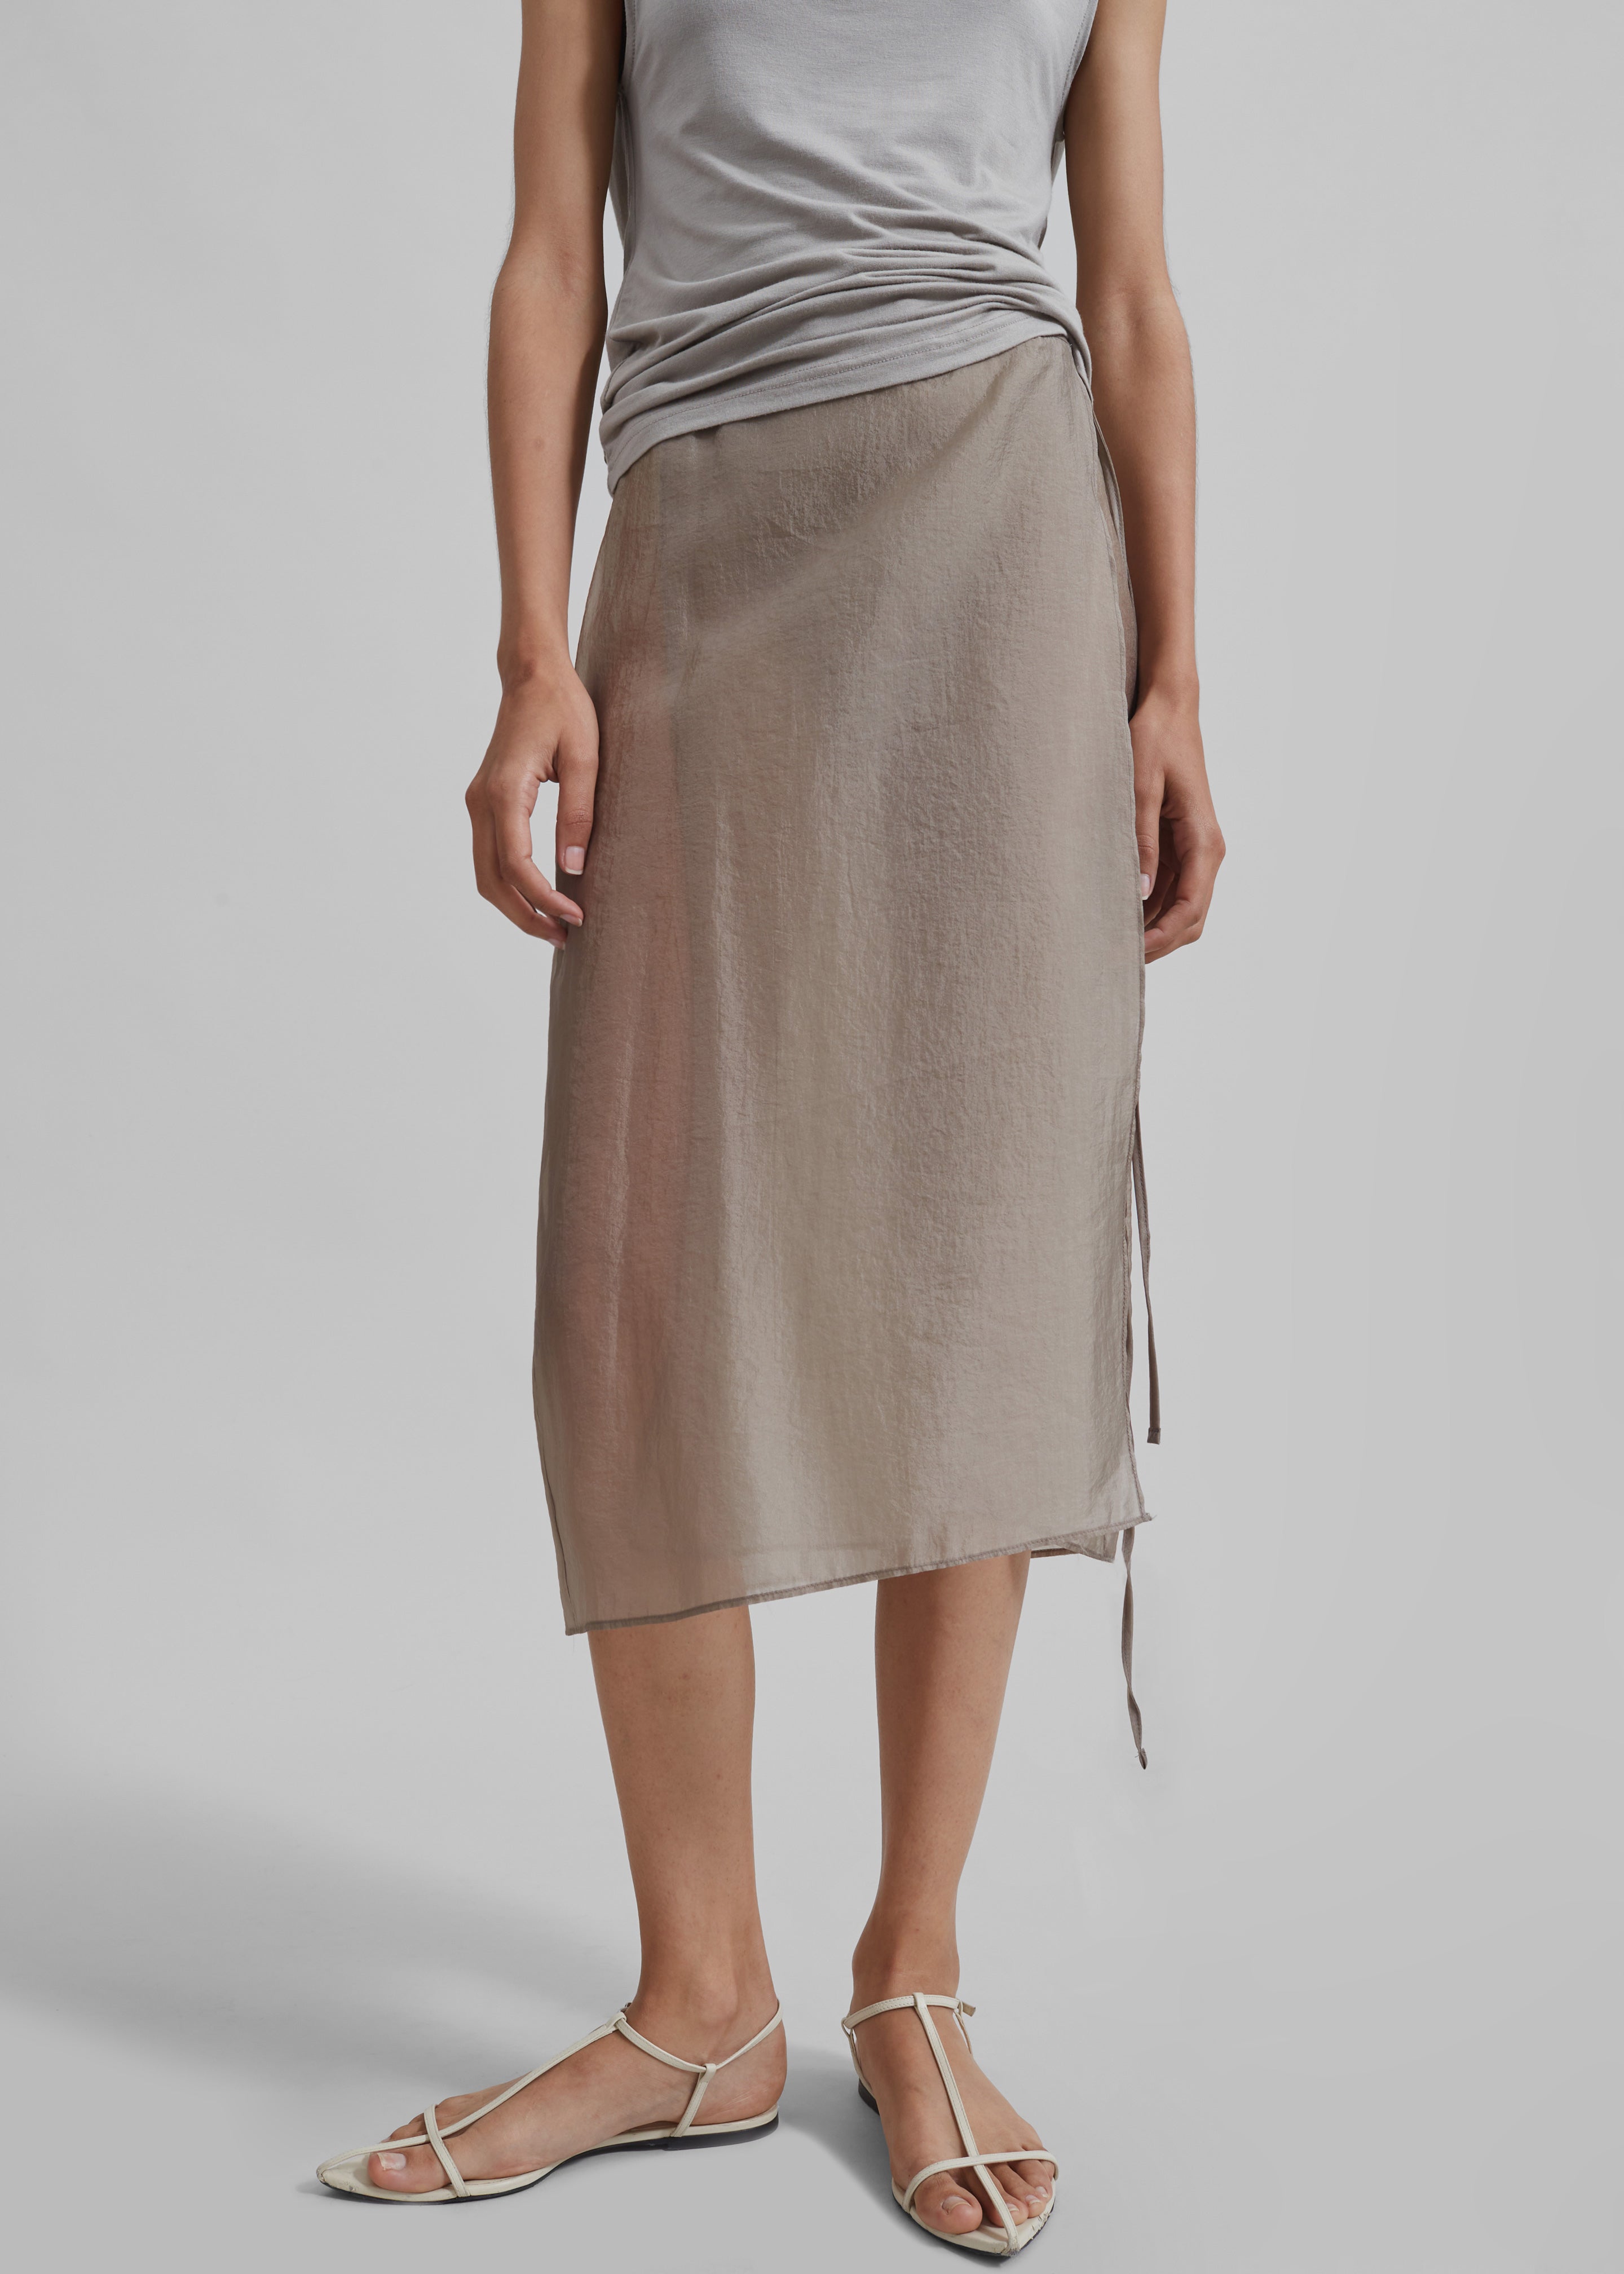 Tia Sheer Layered Skirt - Beige - 4